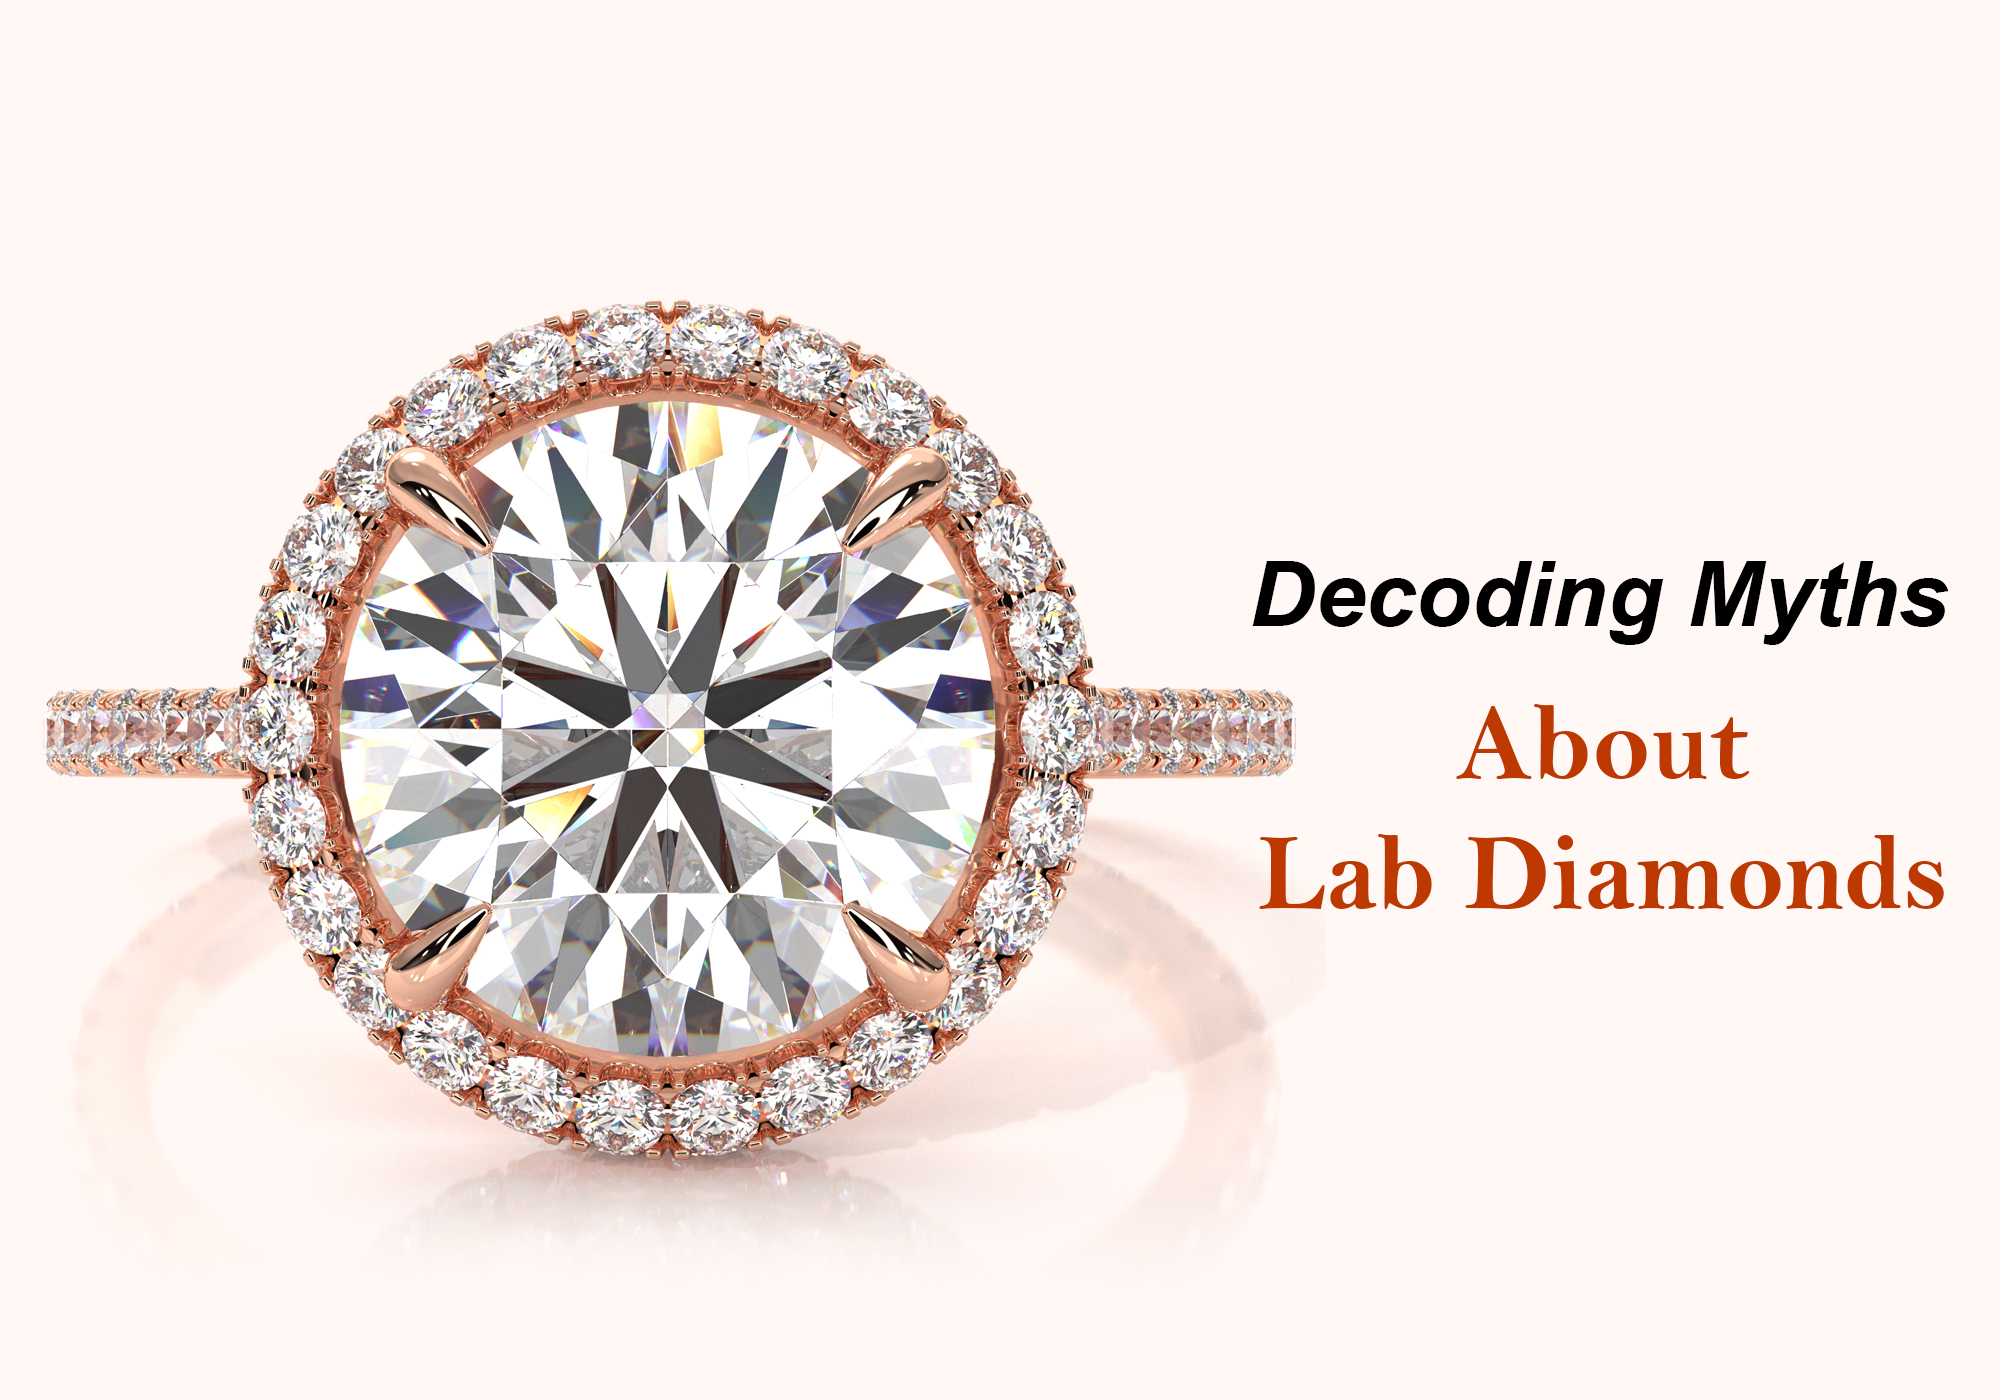 Myths about lab-grown diamonds